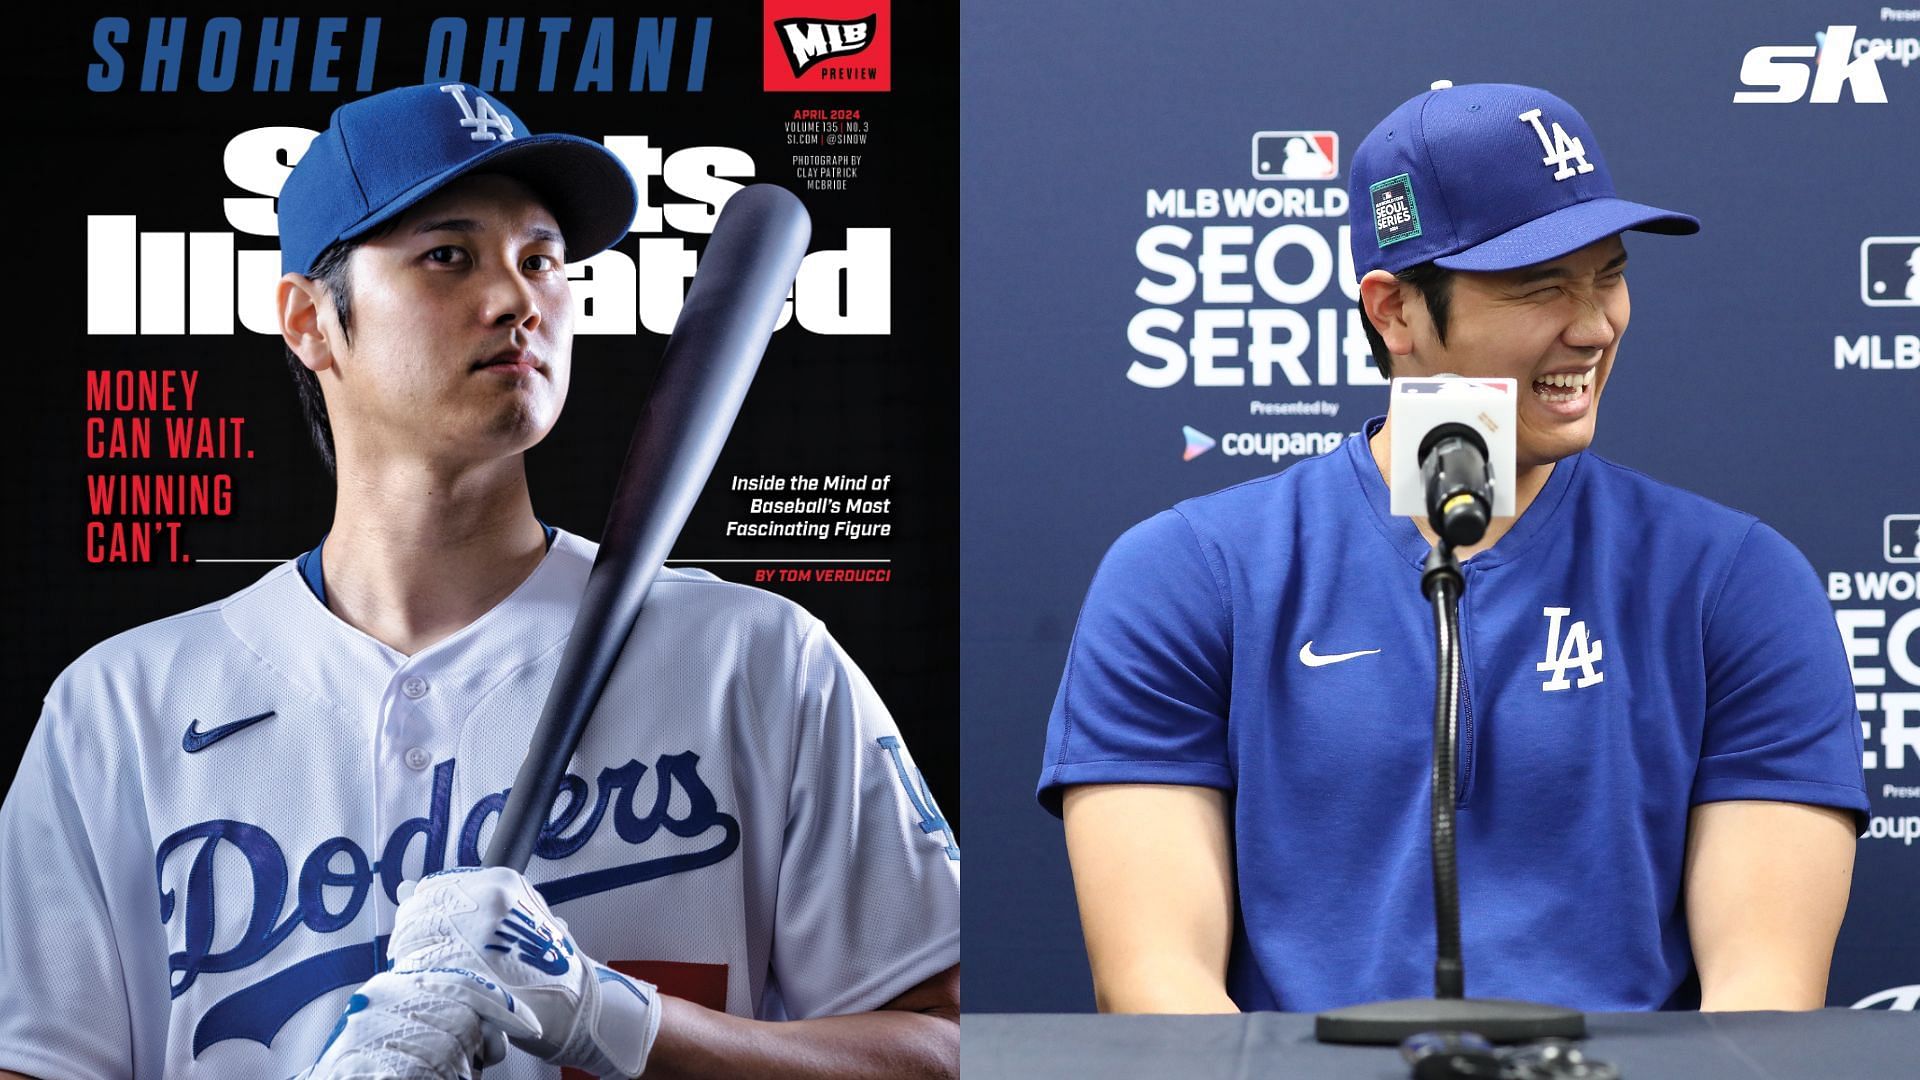 Shohei Ohtani features on Sports Illustrated